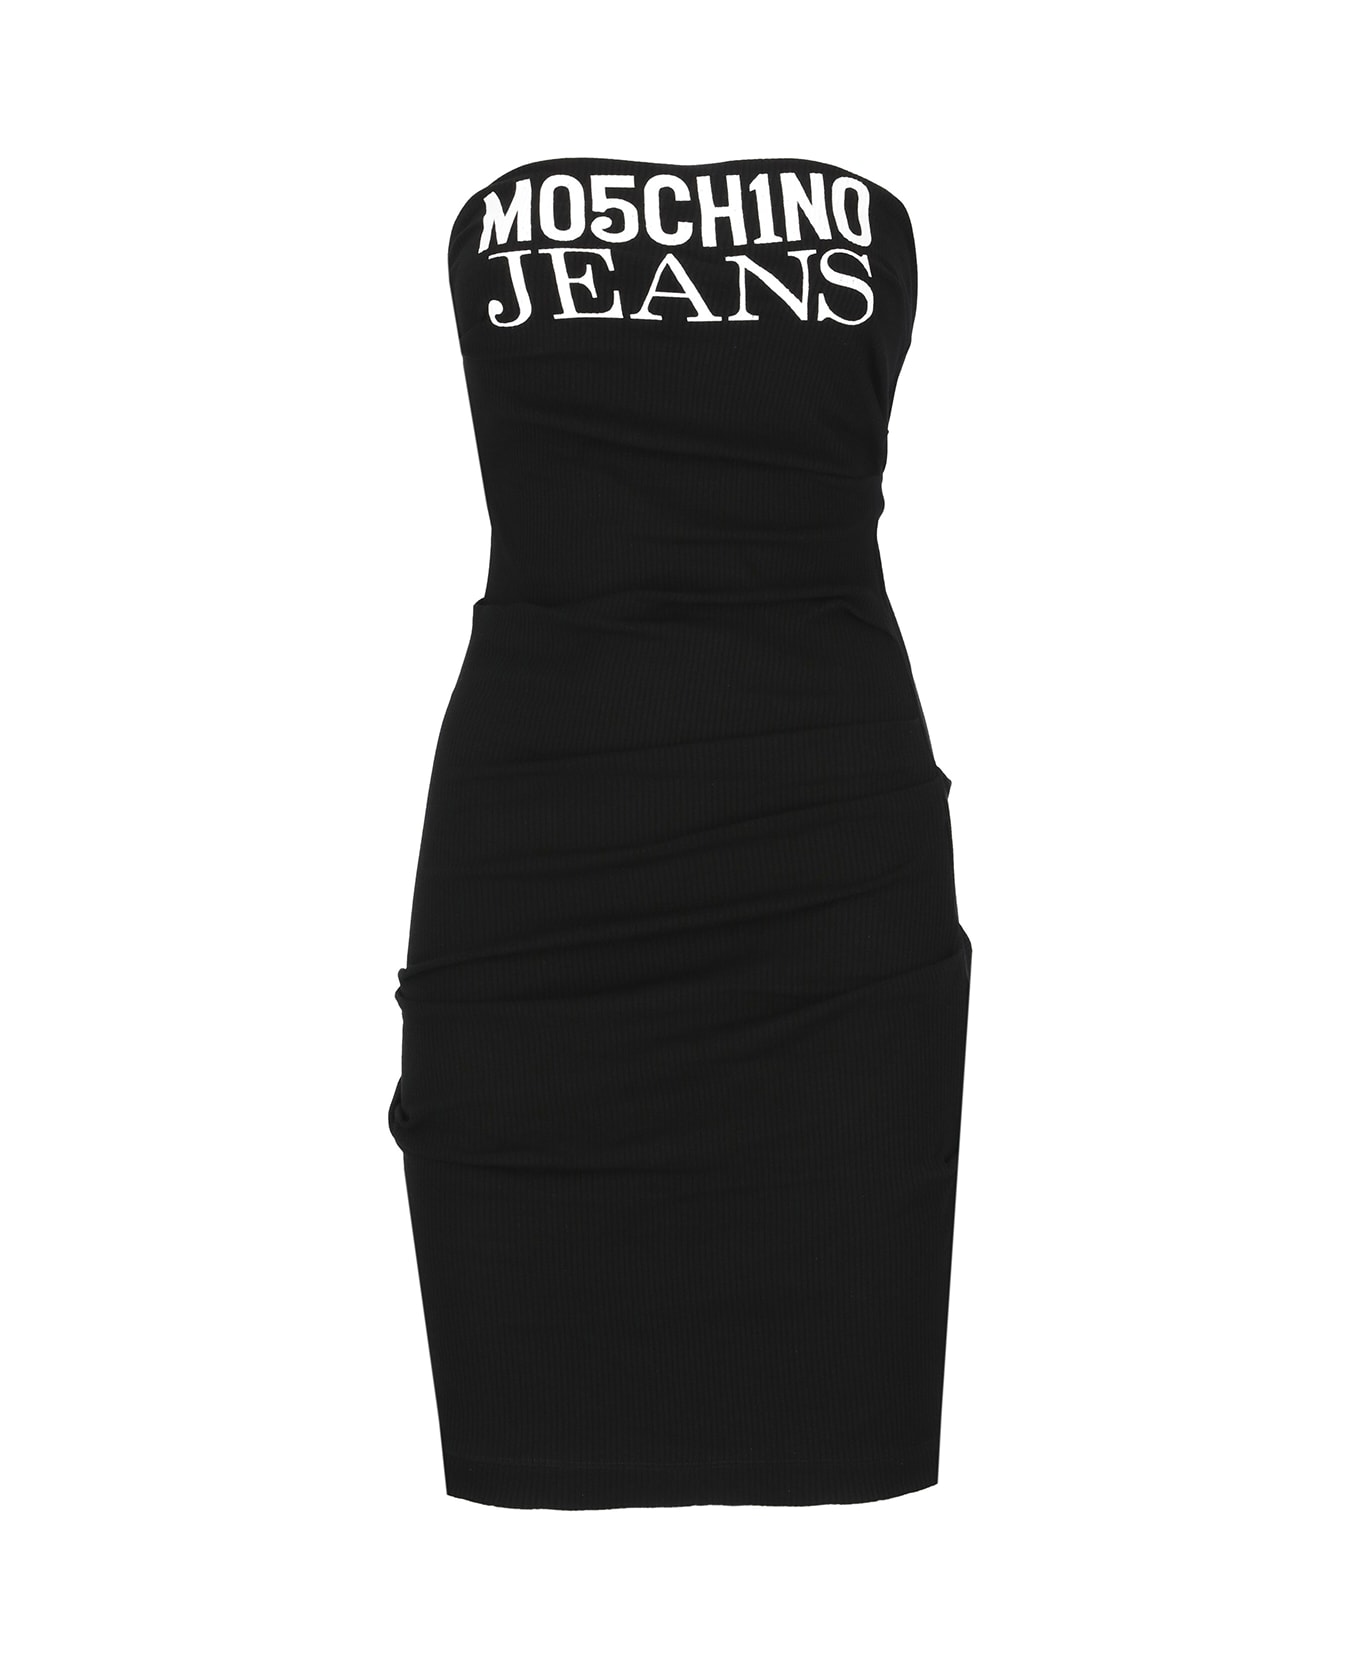 M05CH1N0 Jeans Dress With Logo - Black